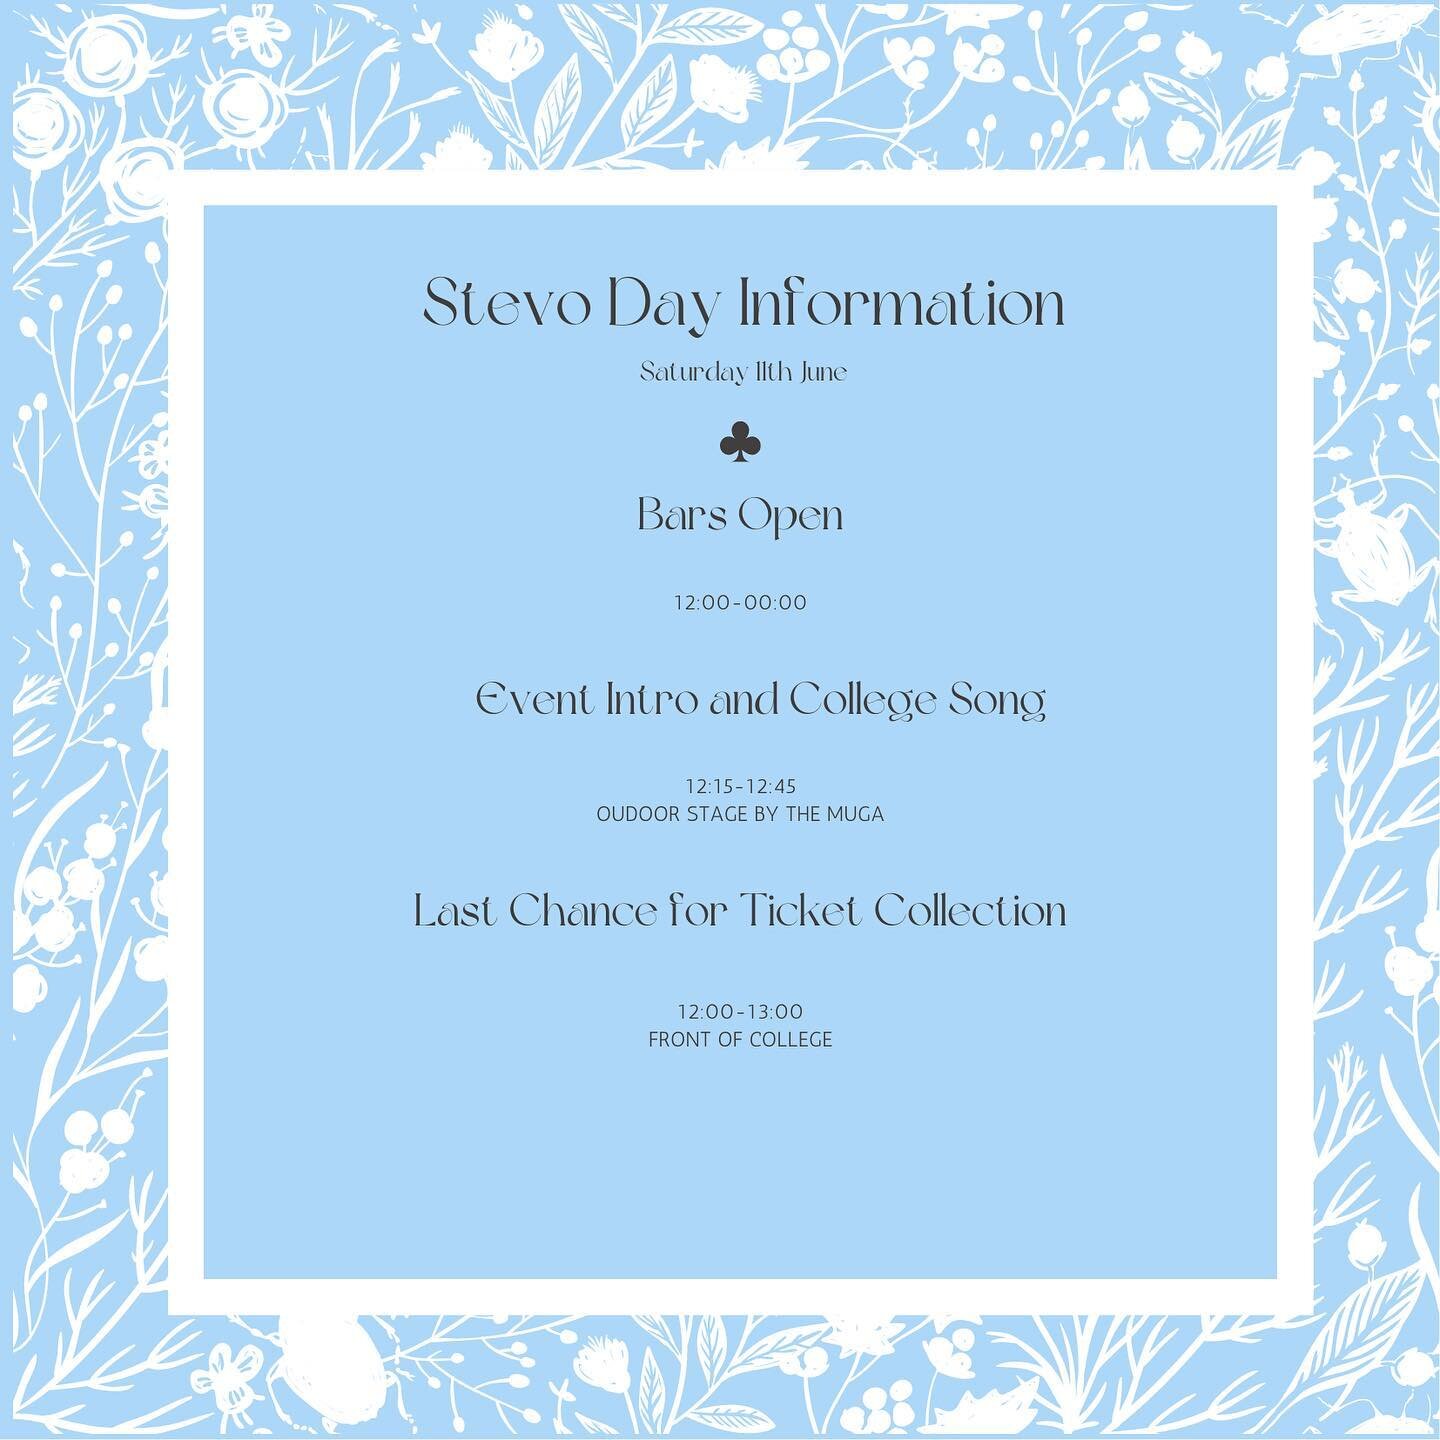 *Stevo Day Information*